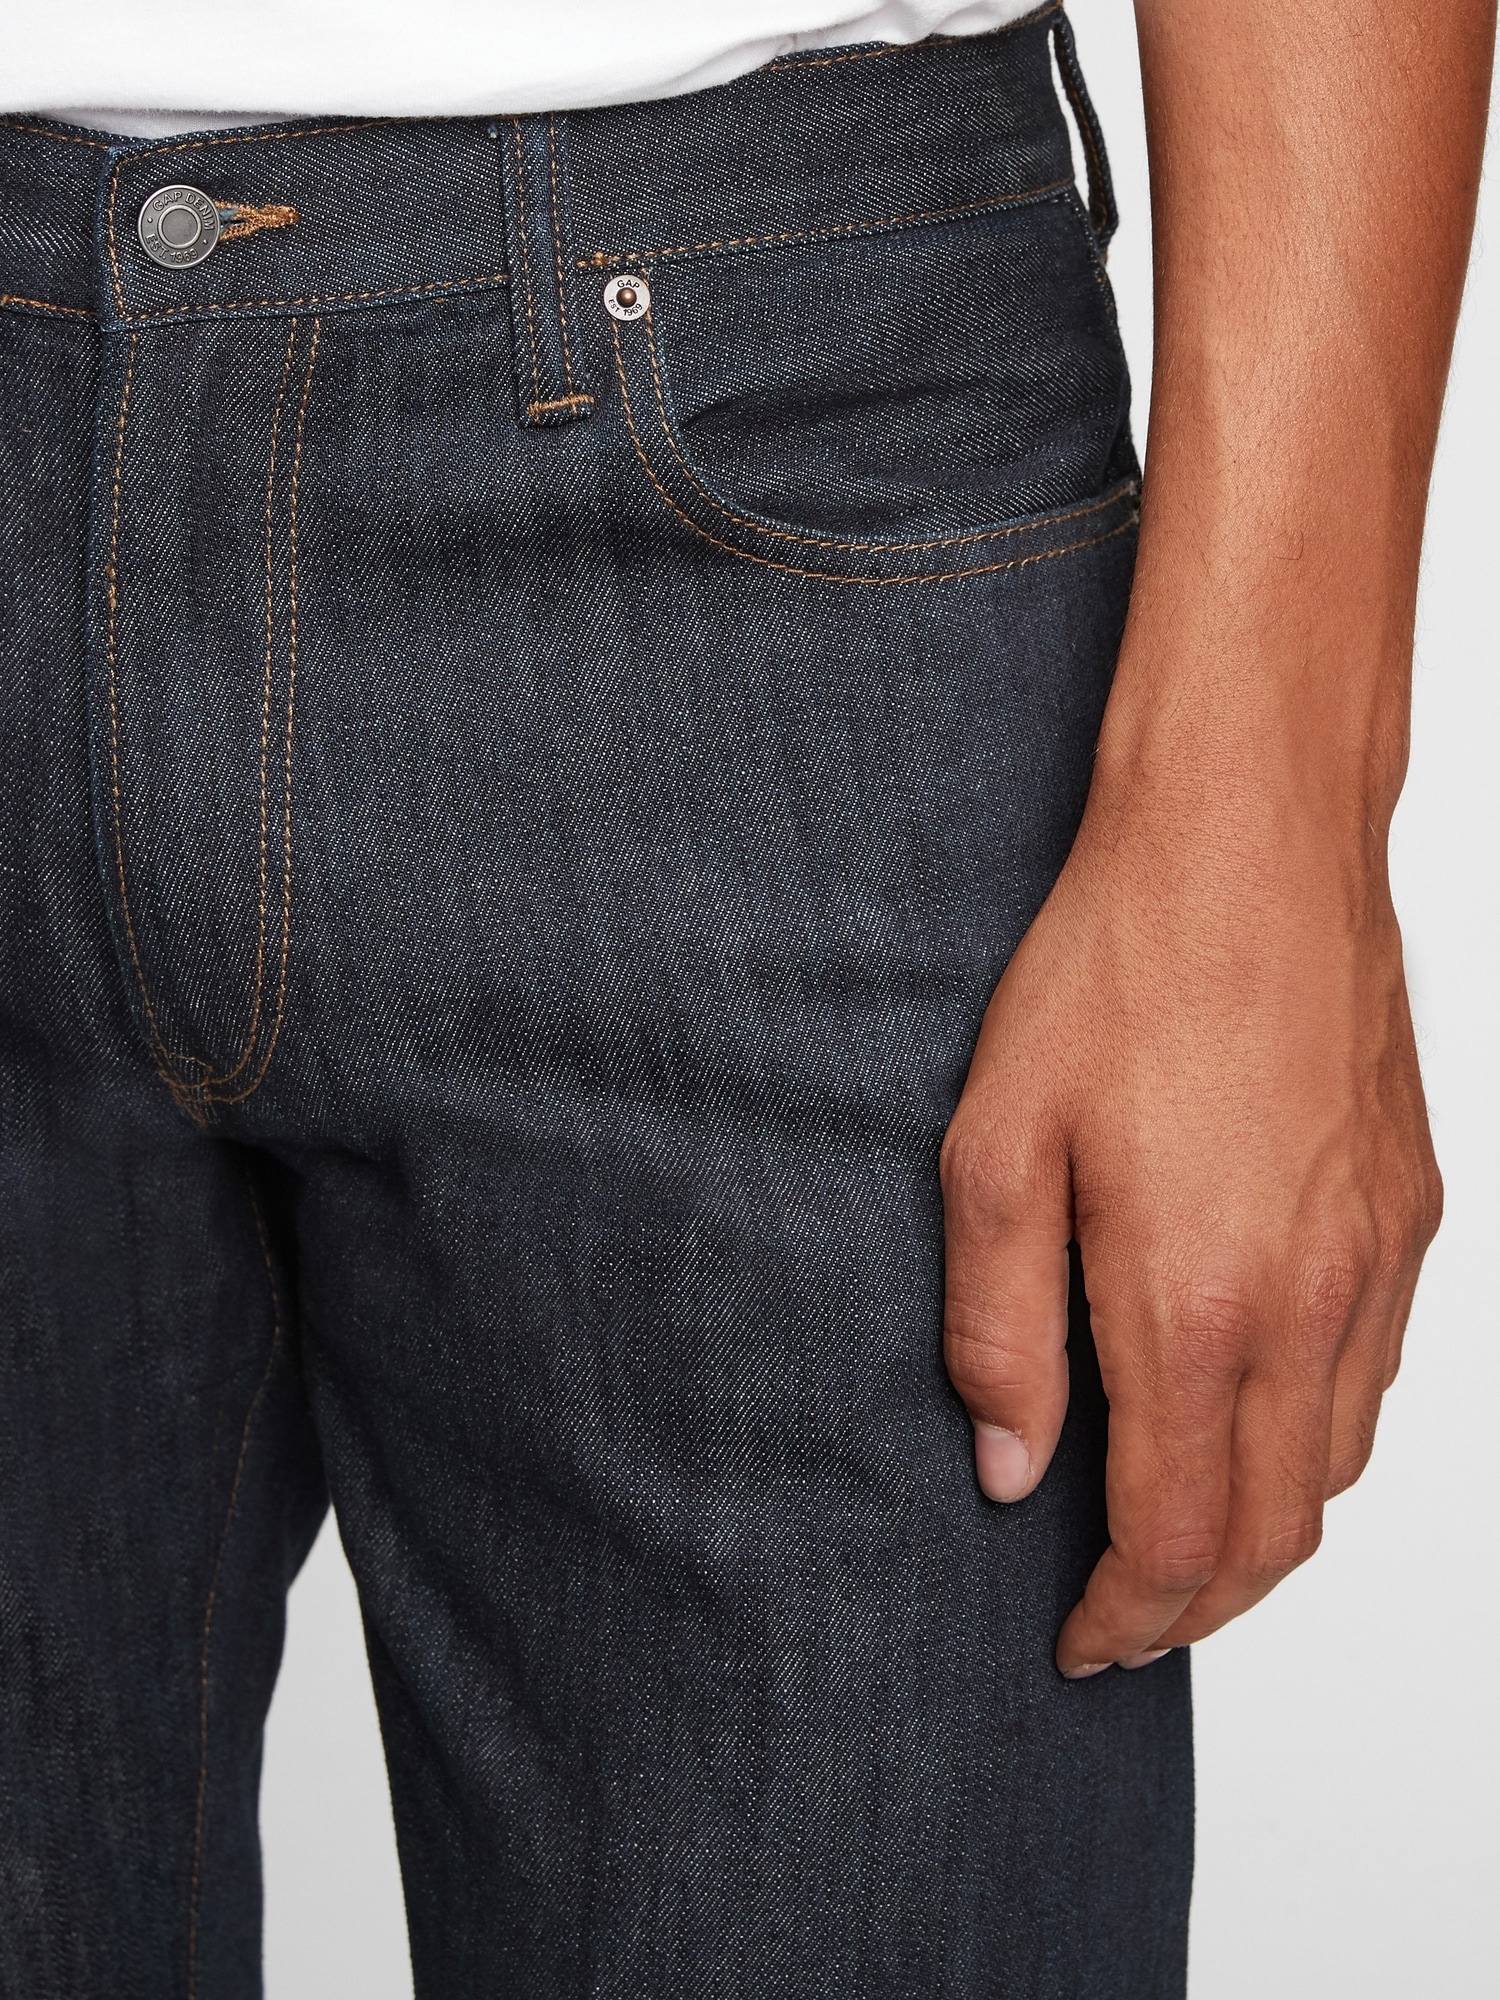 Gap Denim Soft Wear Straight Leg Stretch Flex Dark Blue Jeans Mens 30 M6  for sale online